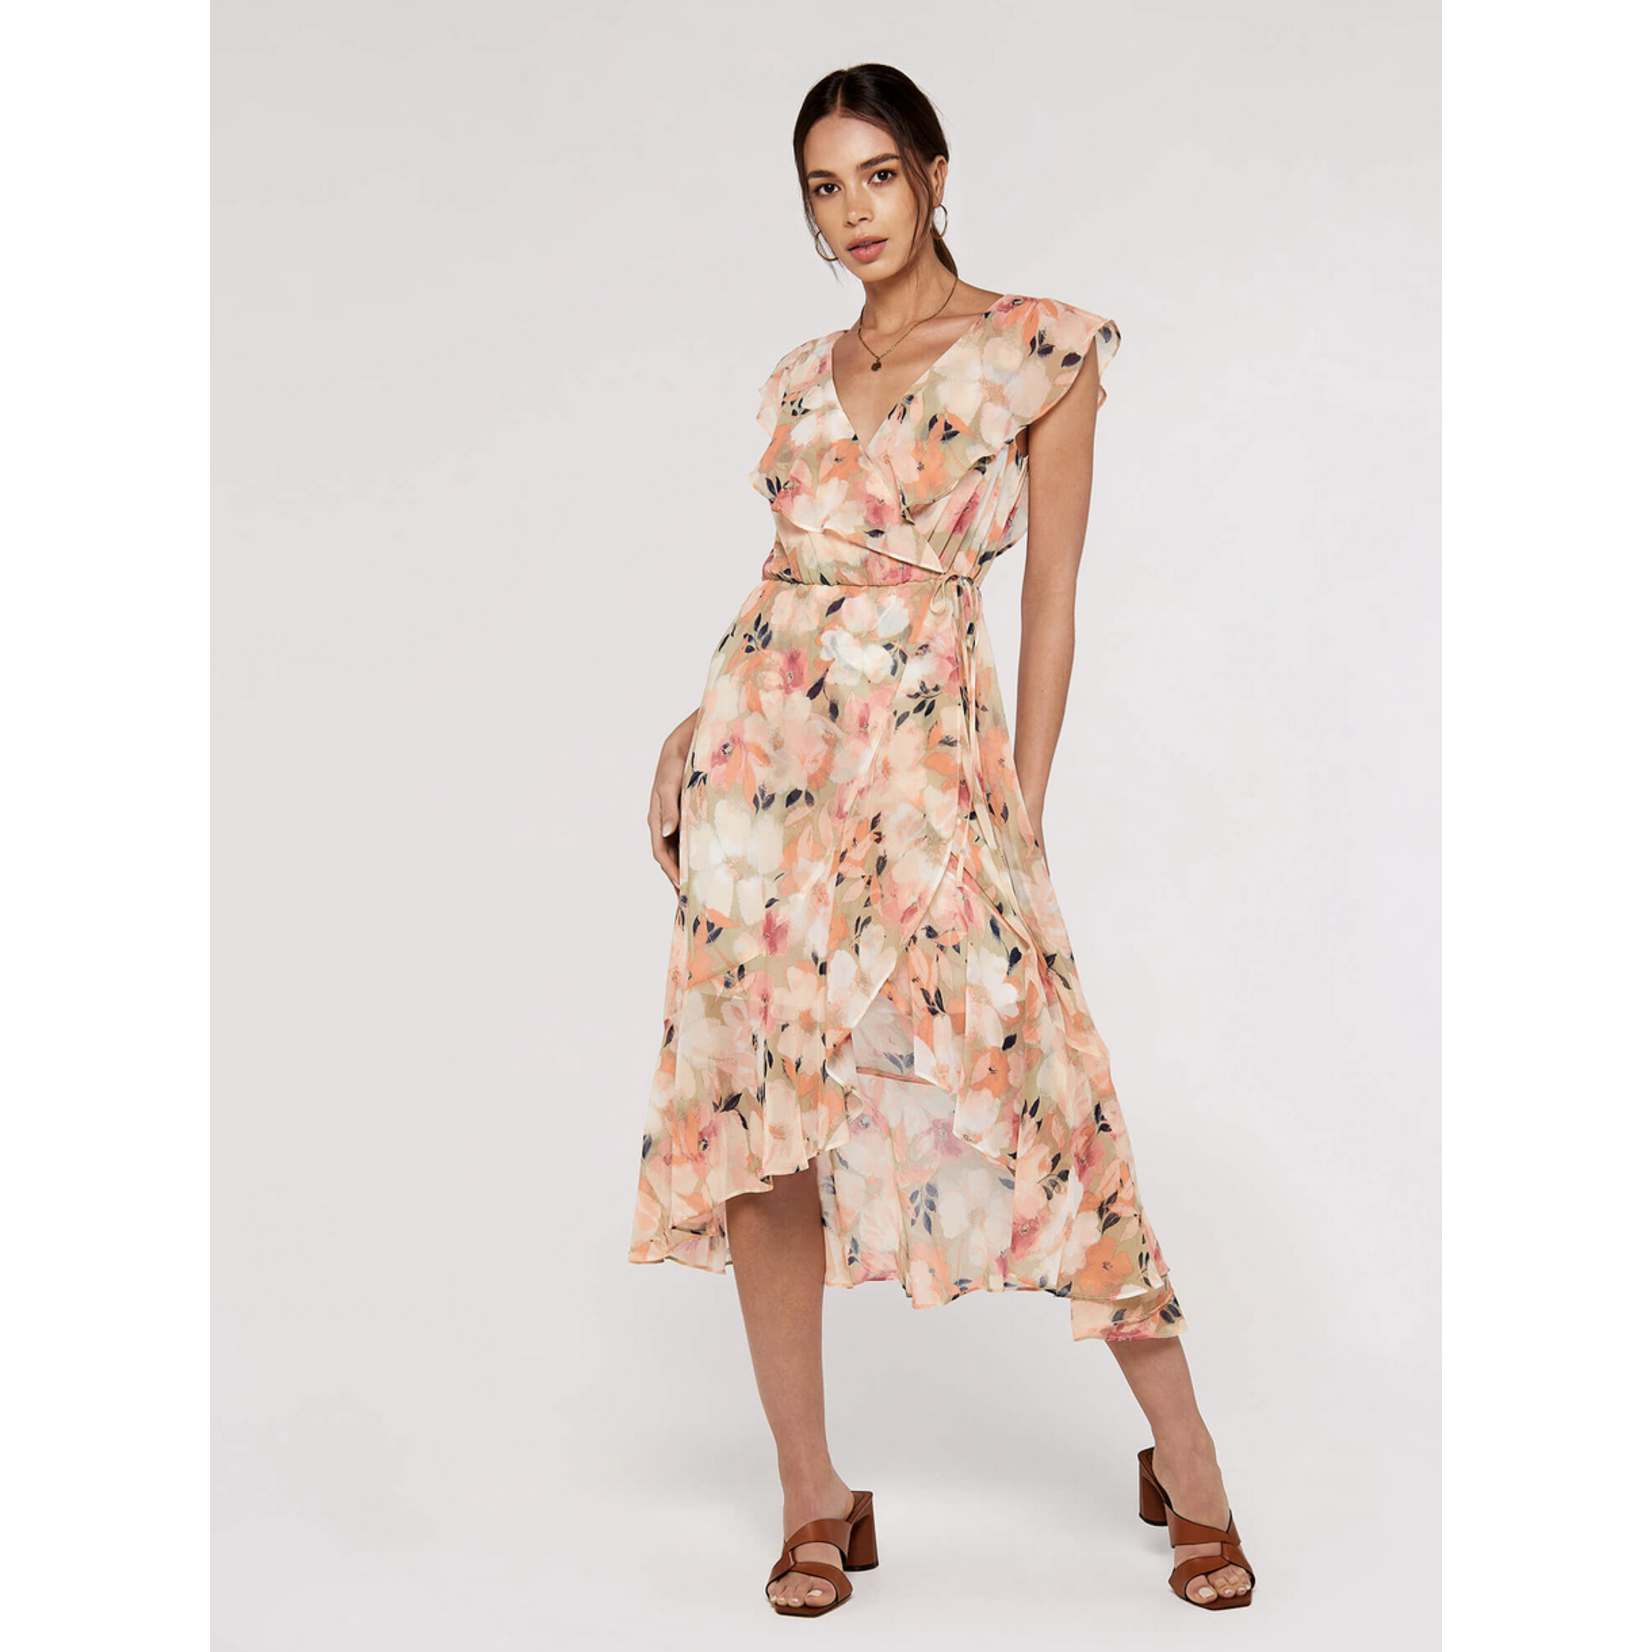 Apricot blurred floral ruffle wrap dress